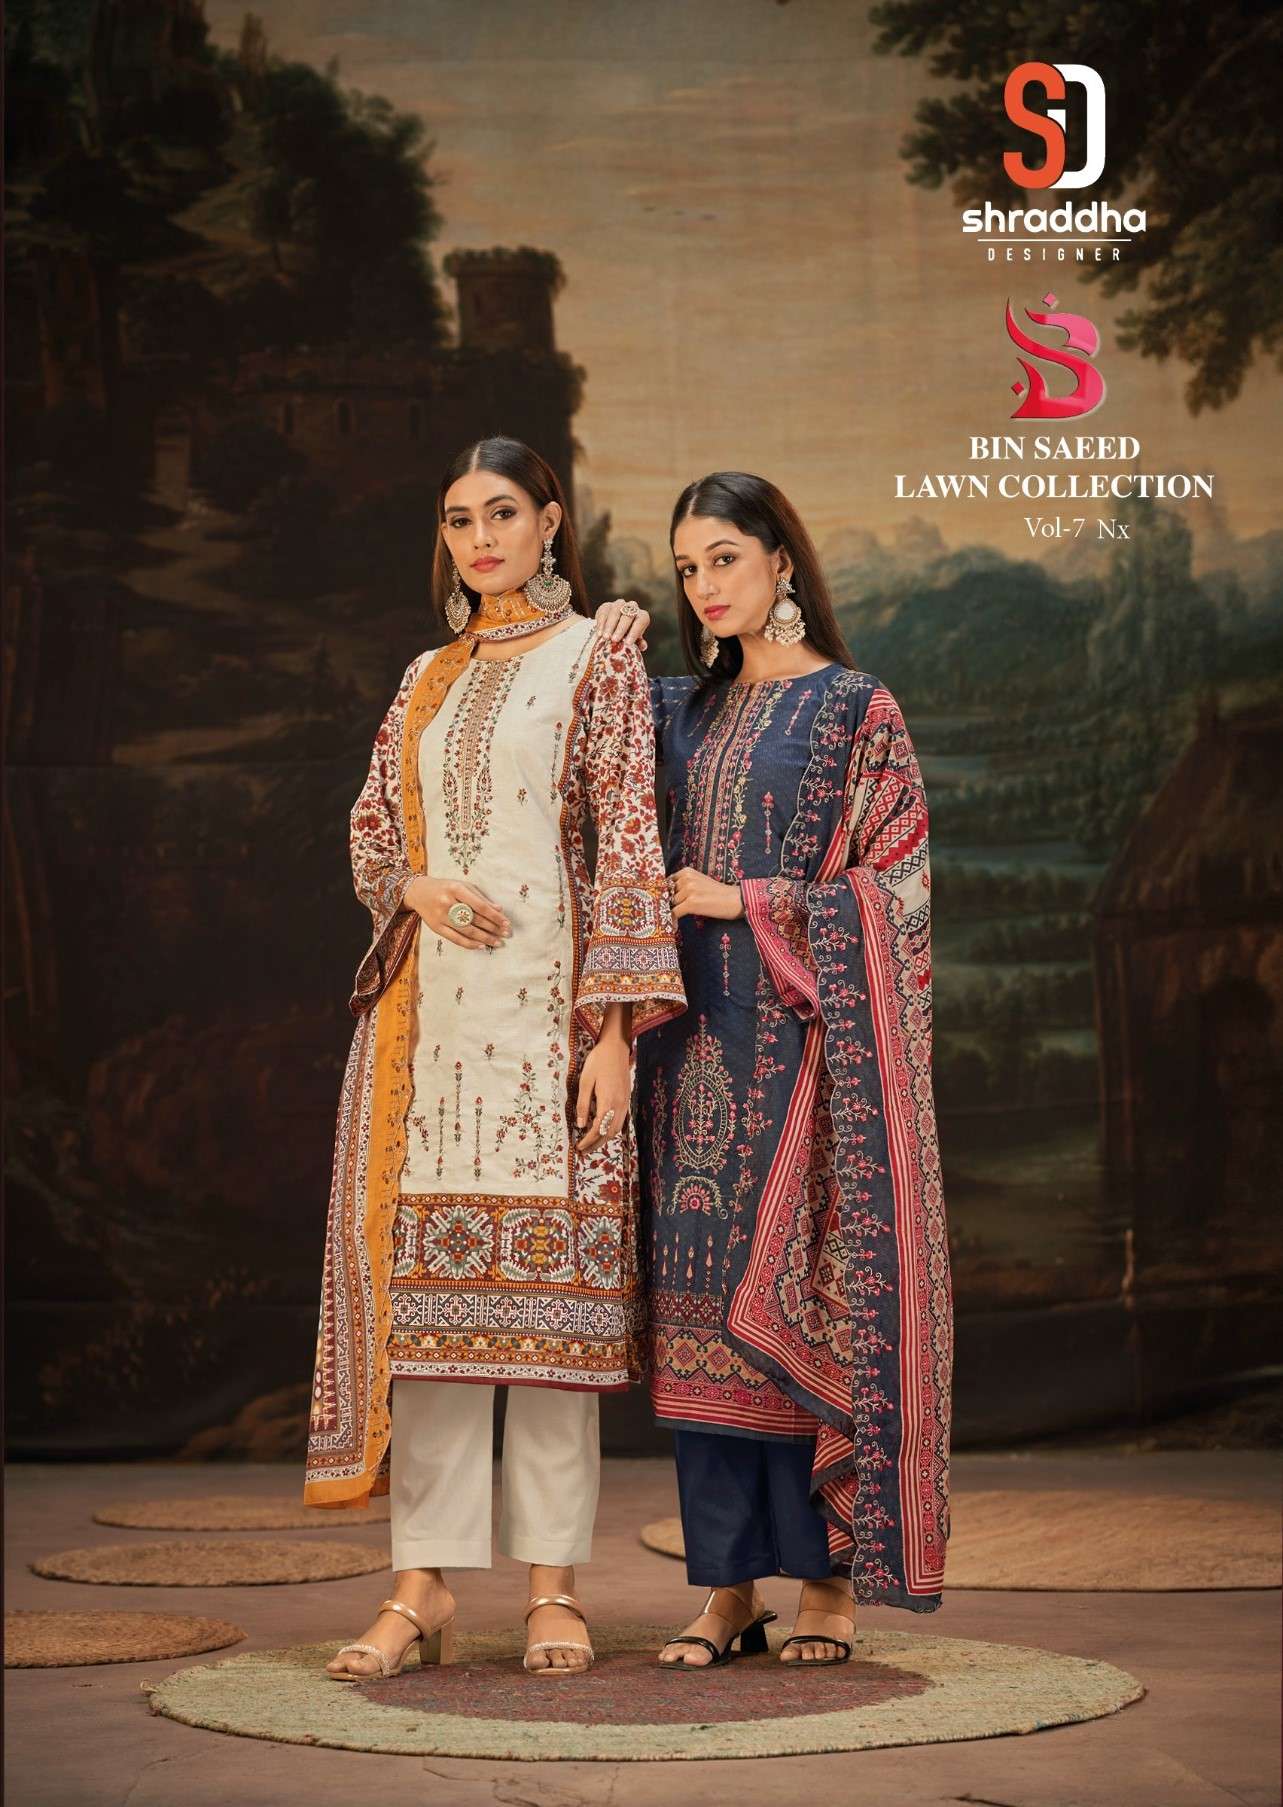 shraddha designer bin saeed vol 7 nx fancy wear unstitch salwar suit collection 